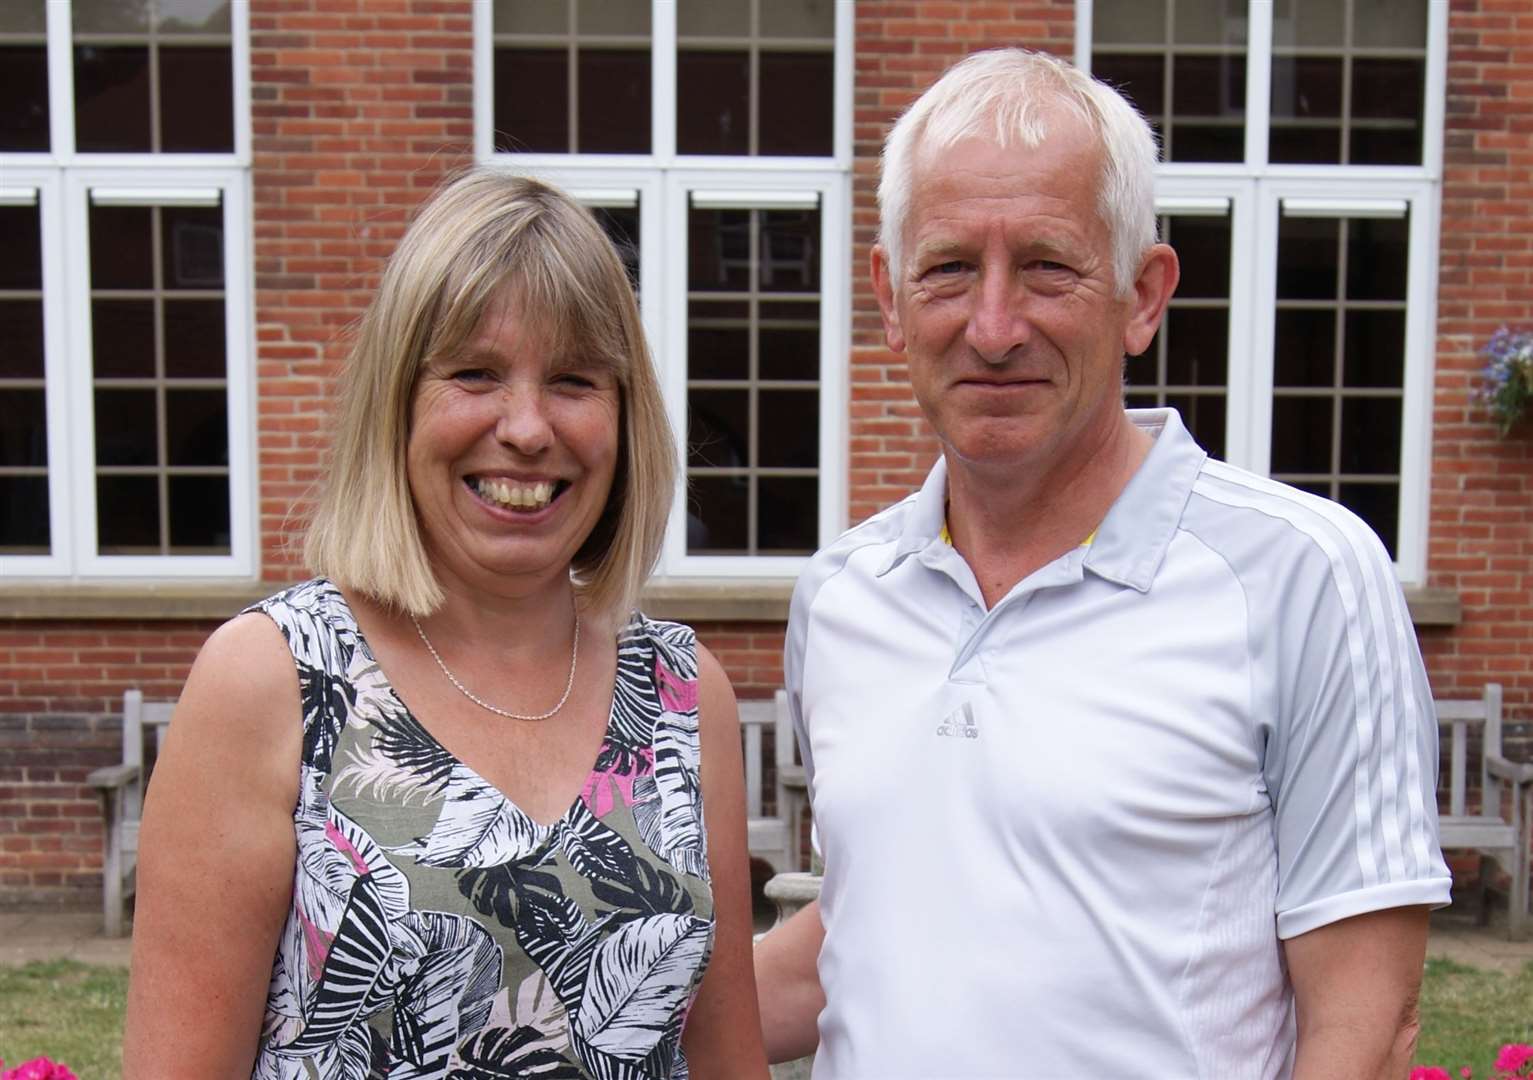 Borden Grammar School teacher Simon Robbins, now retired, and his wife Linda